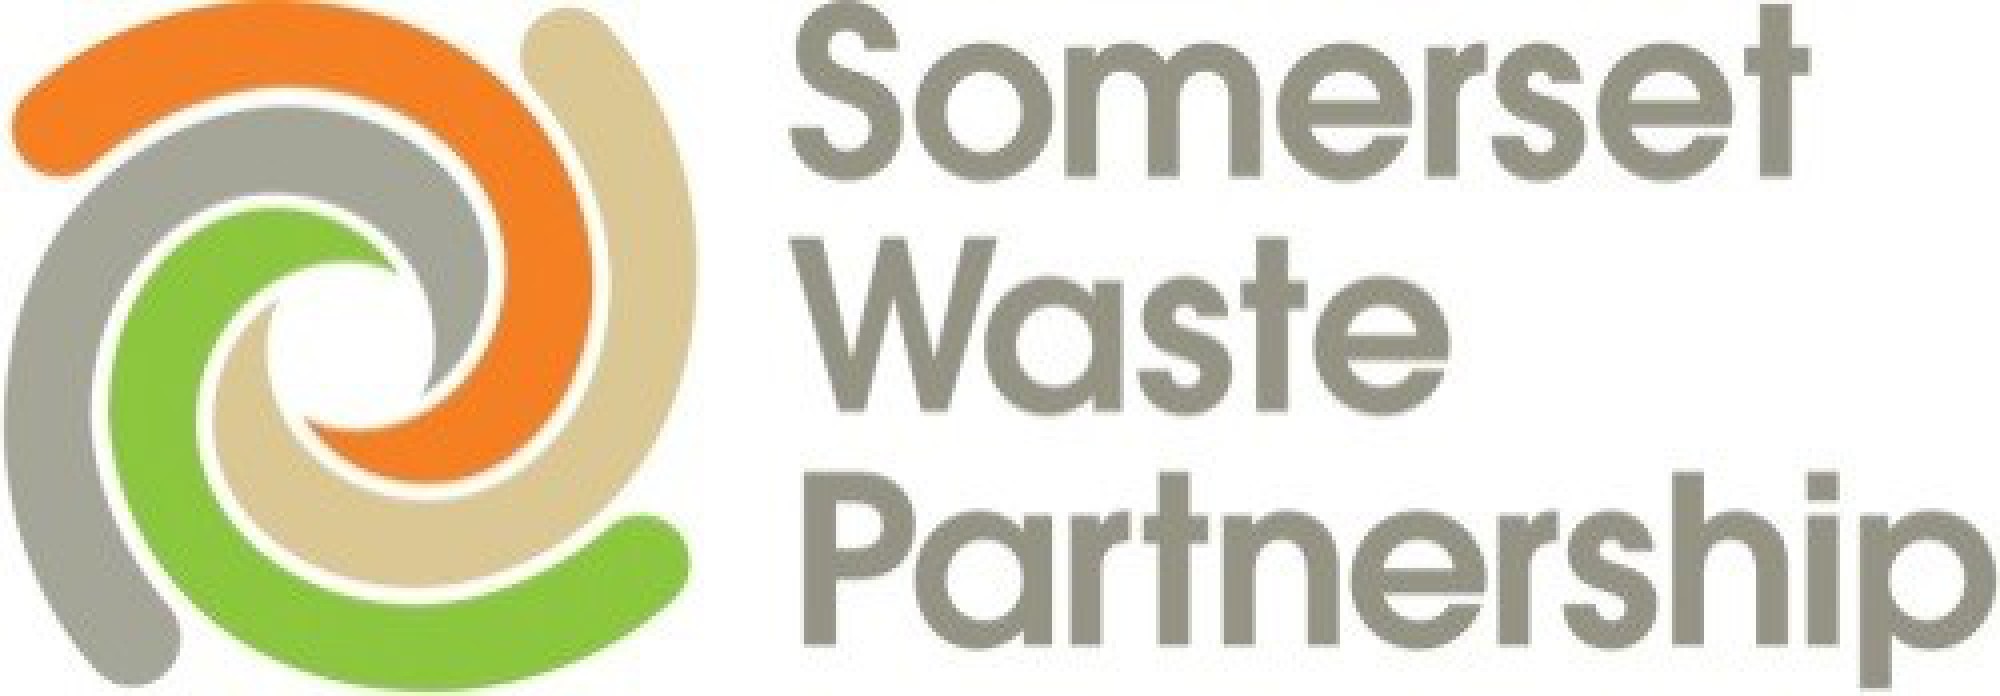 Somerset Waste Partnership - Recycle More Messenger No.6 (South Somerset)